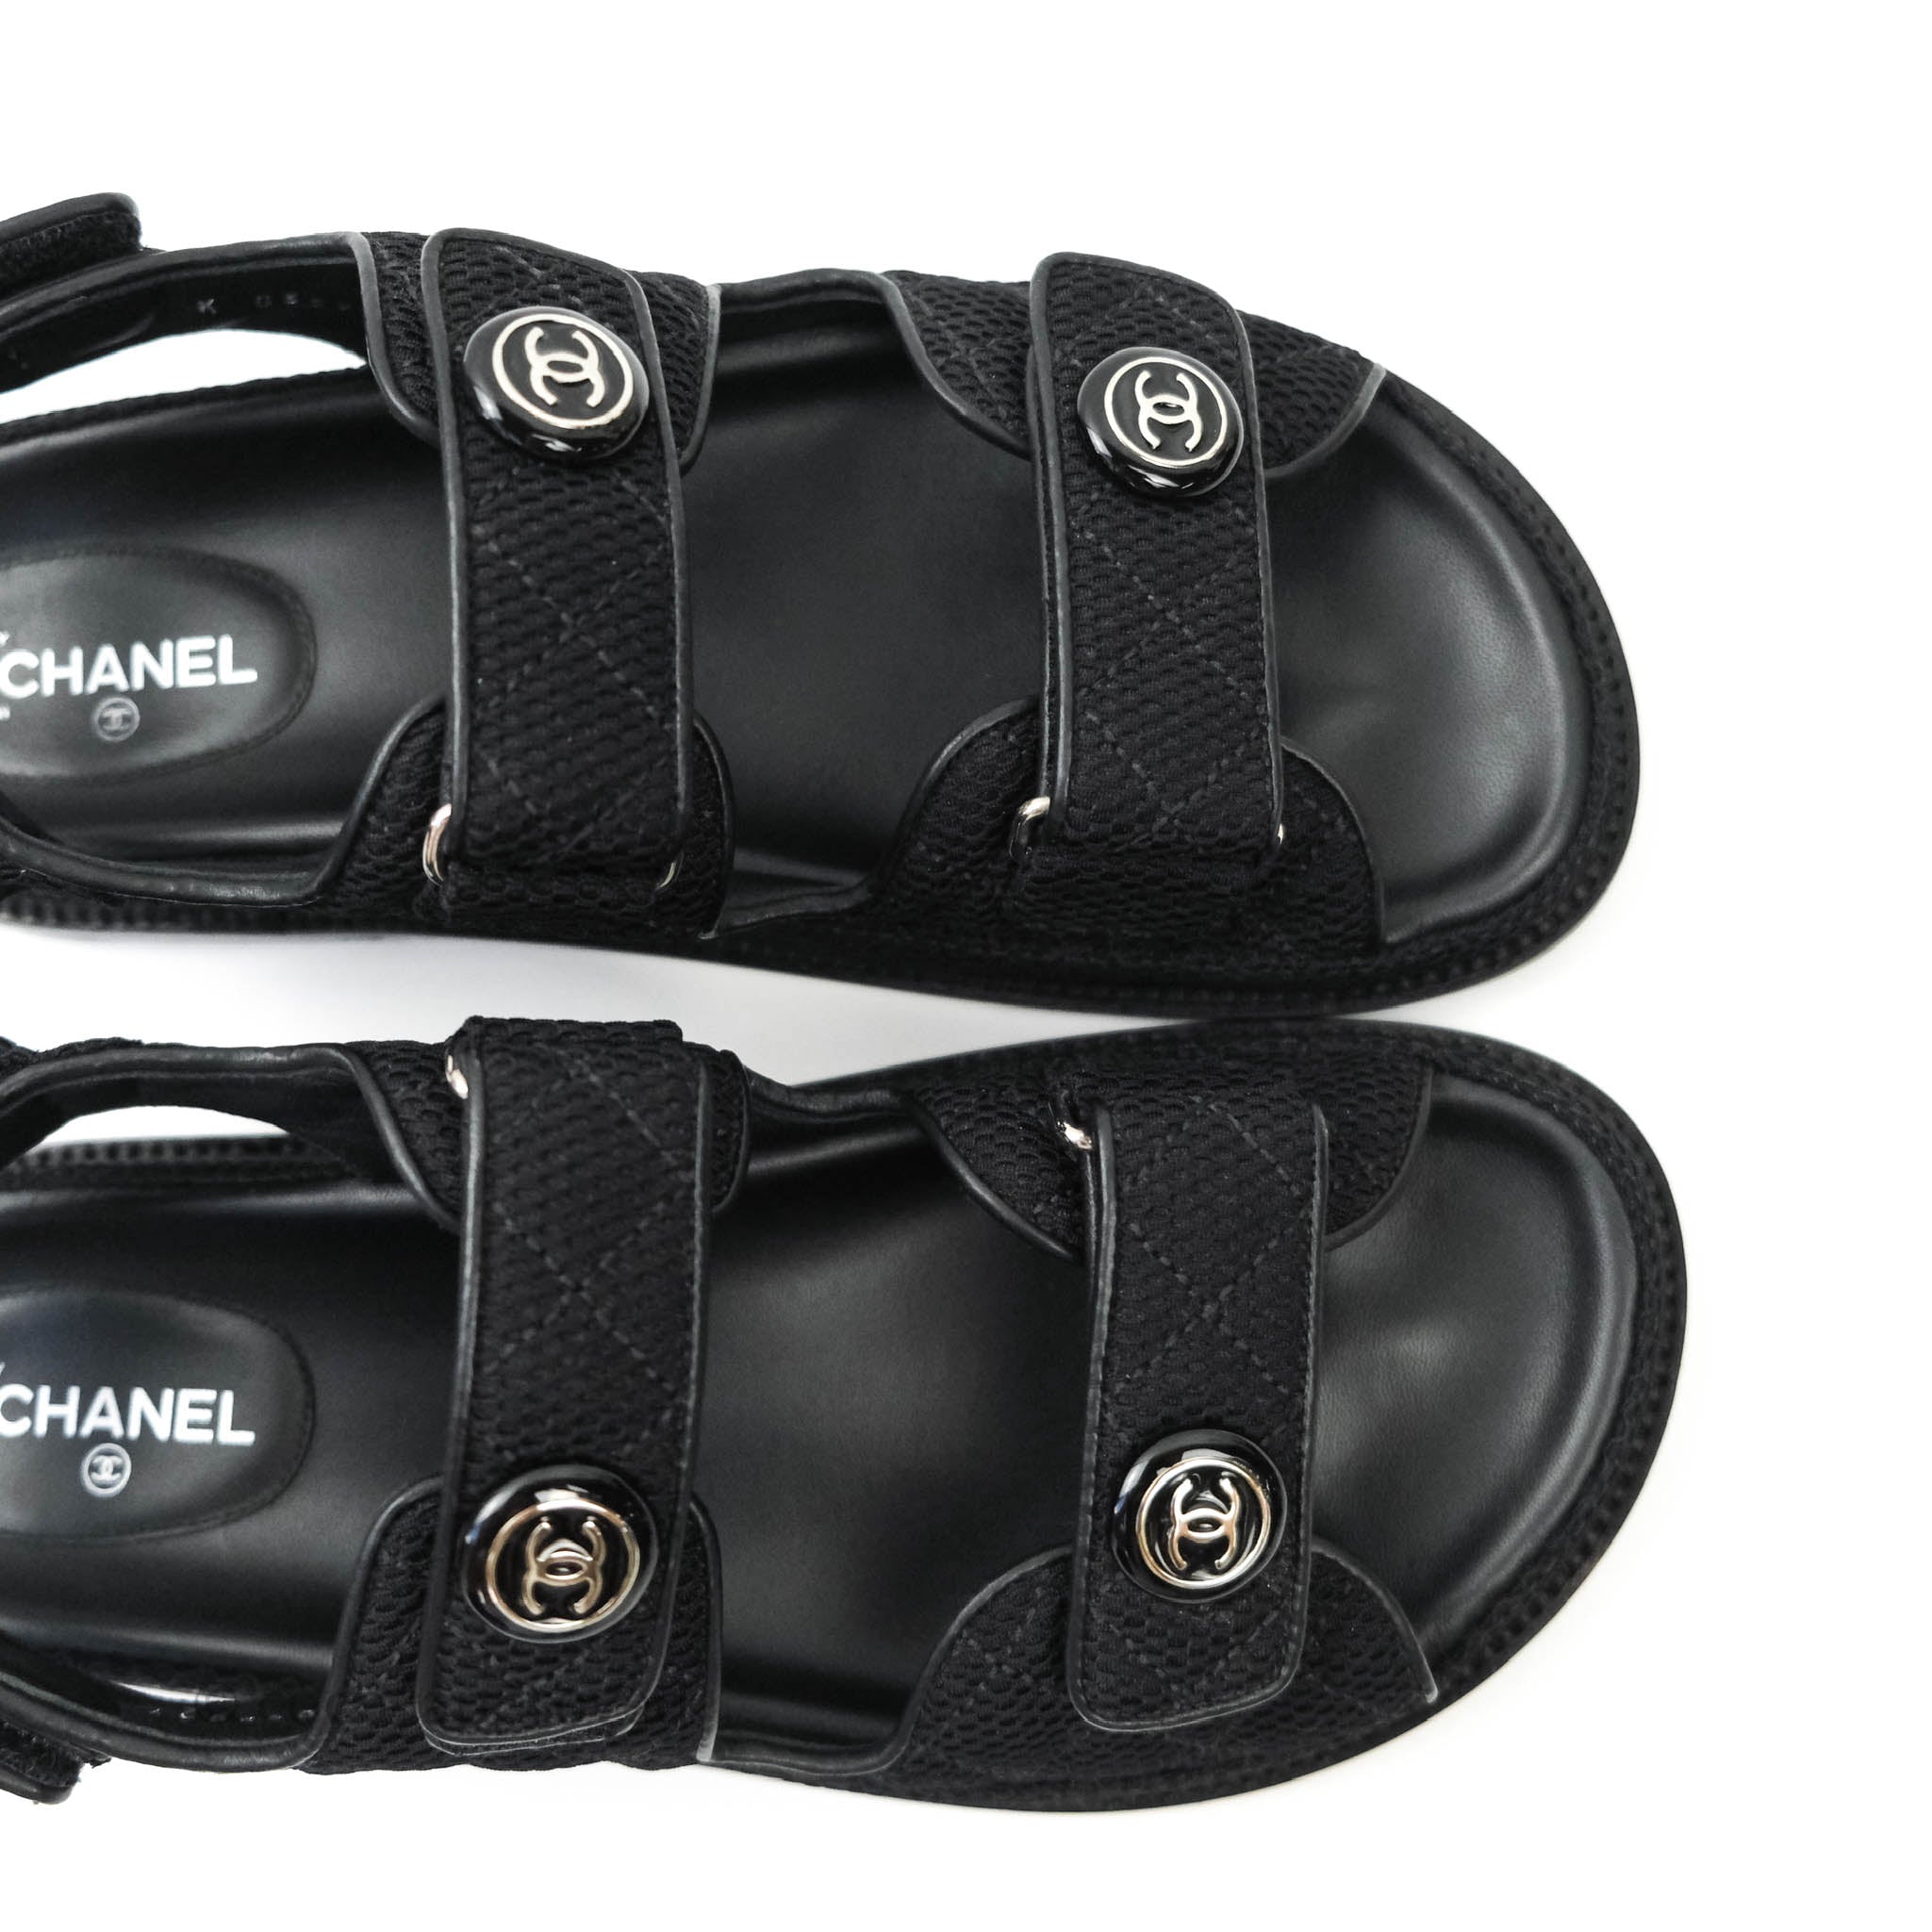 Chanel 21S G31848 black DAD Sandals black logo 41-41.5 EUR sizes